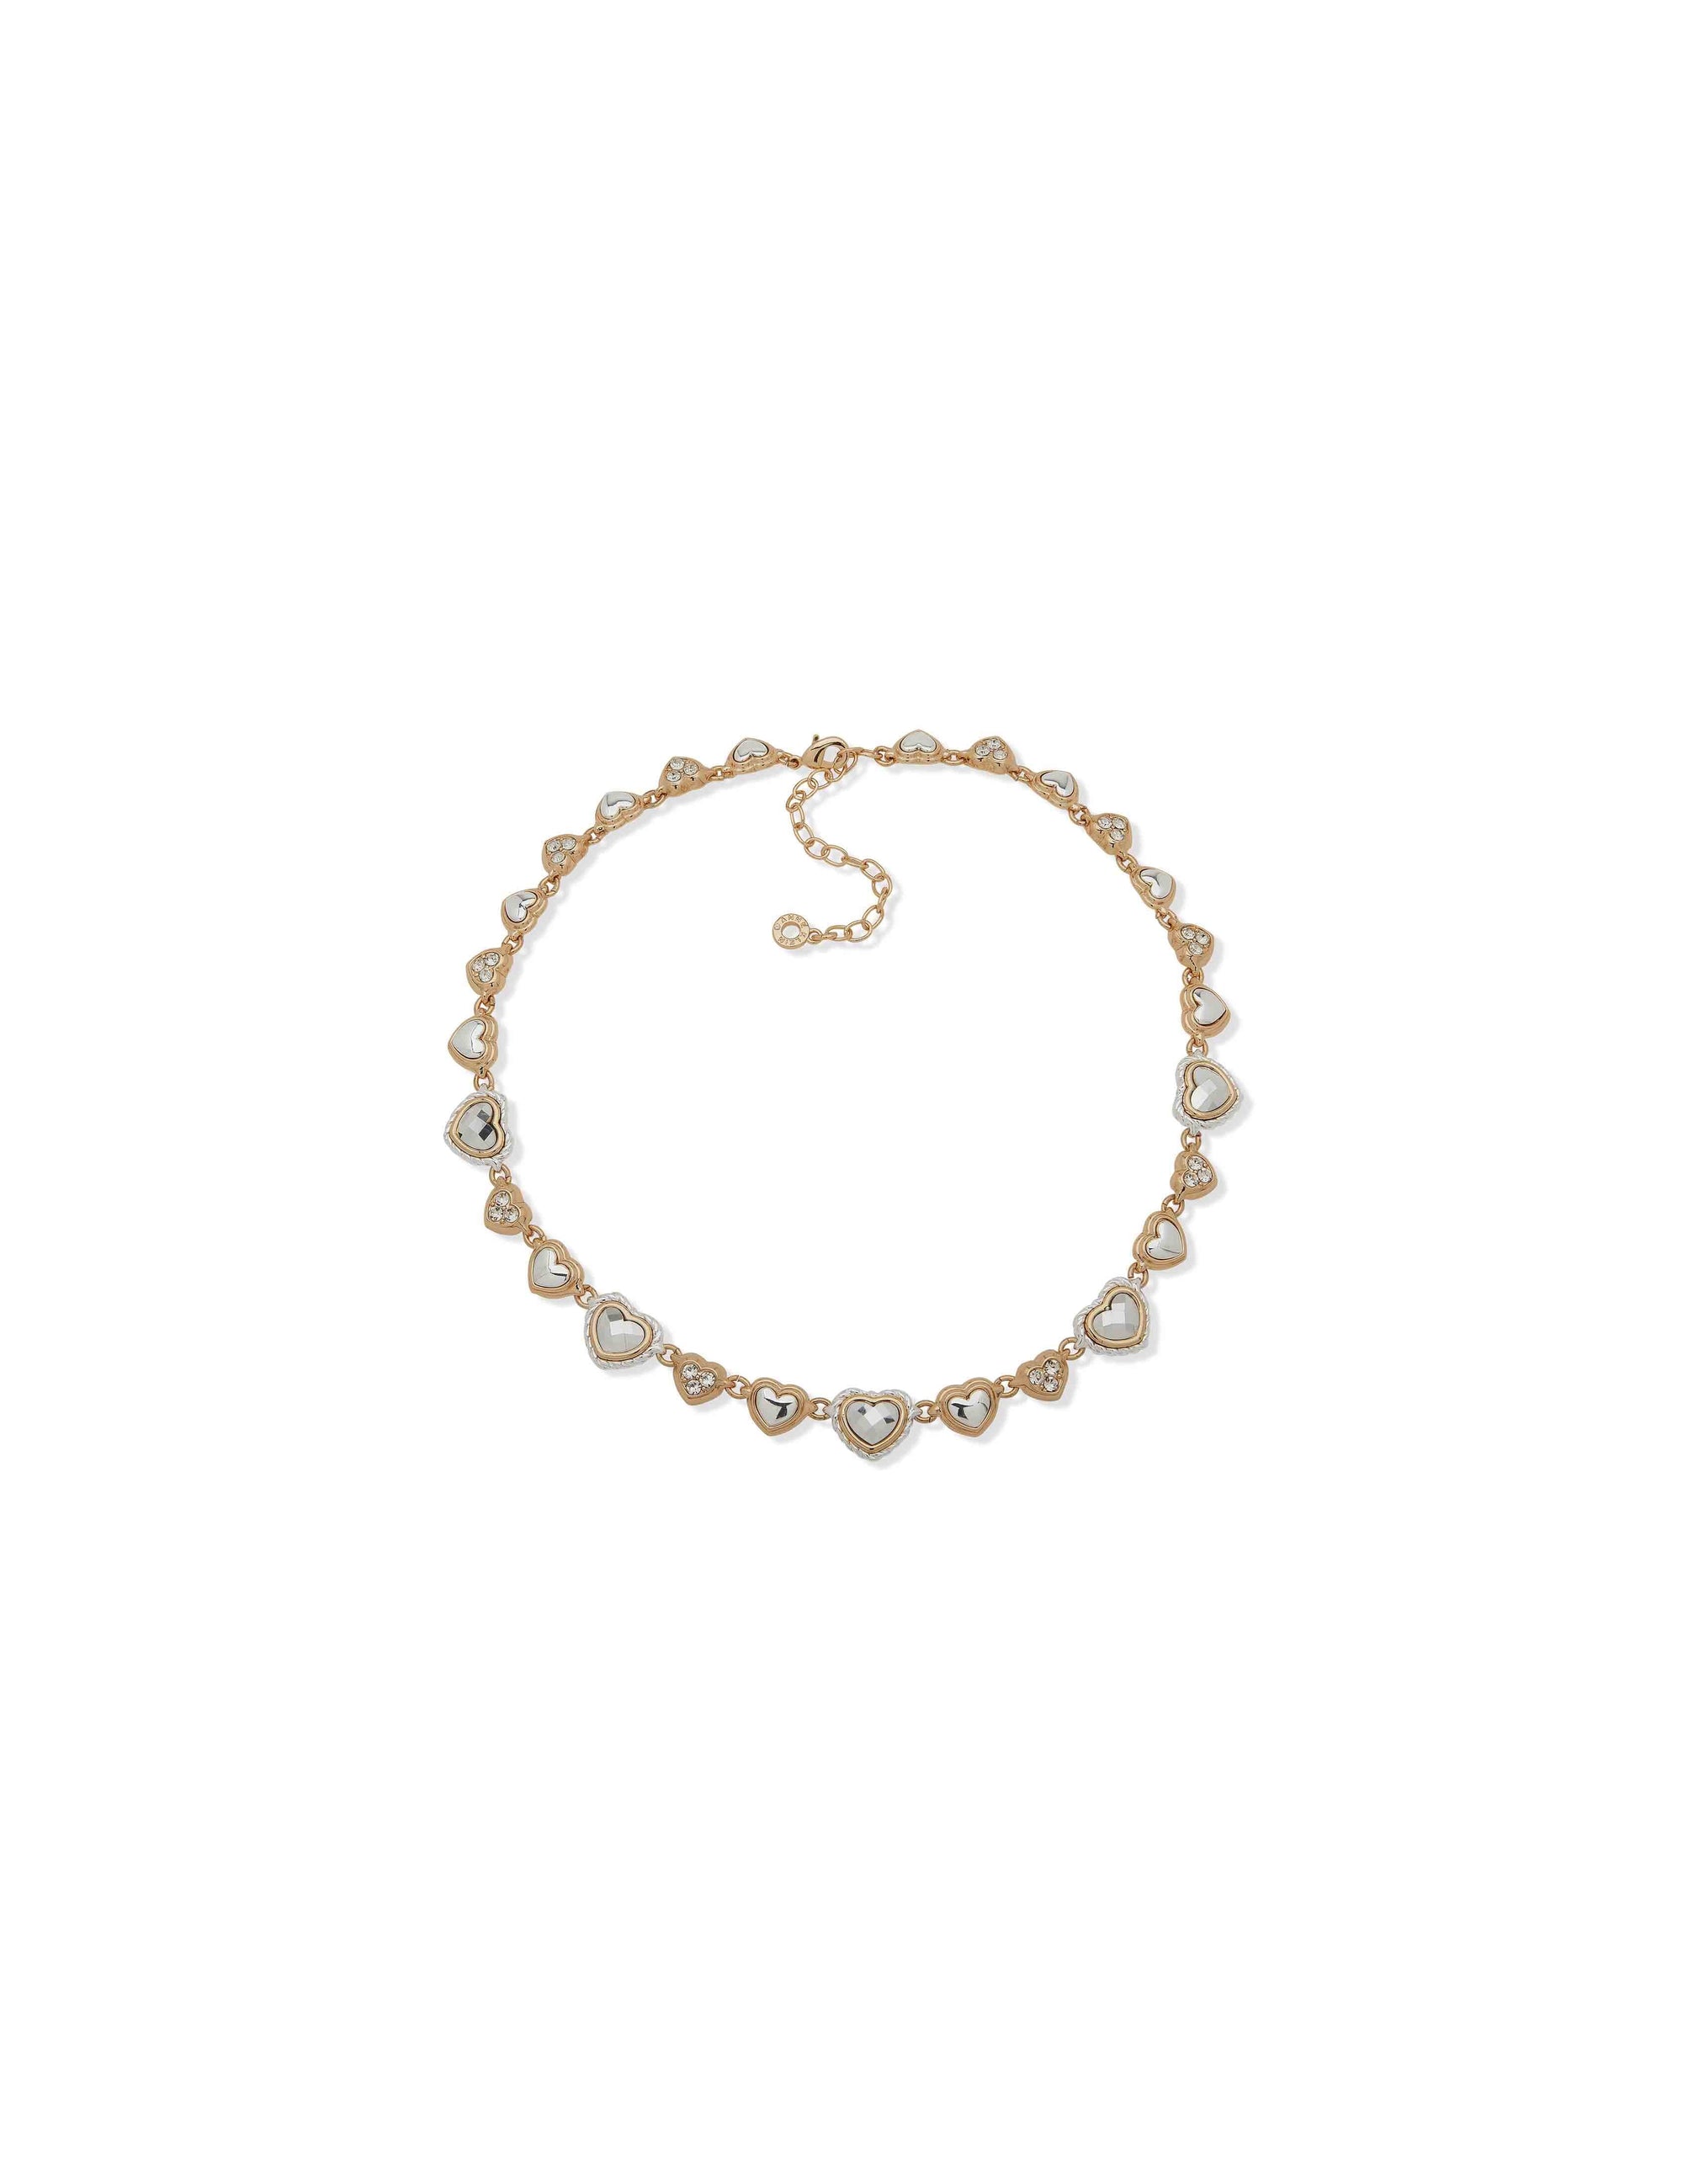 Jewelry - Necklaces - Anne Klein